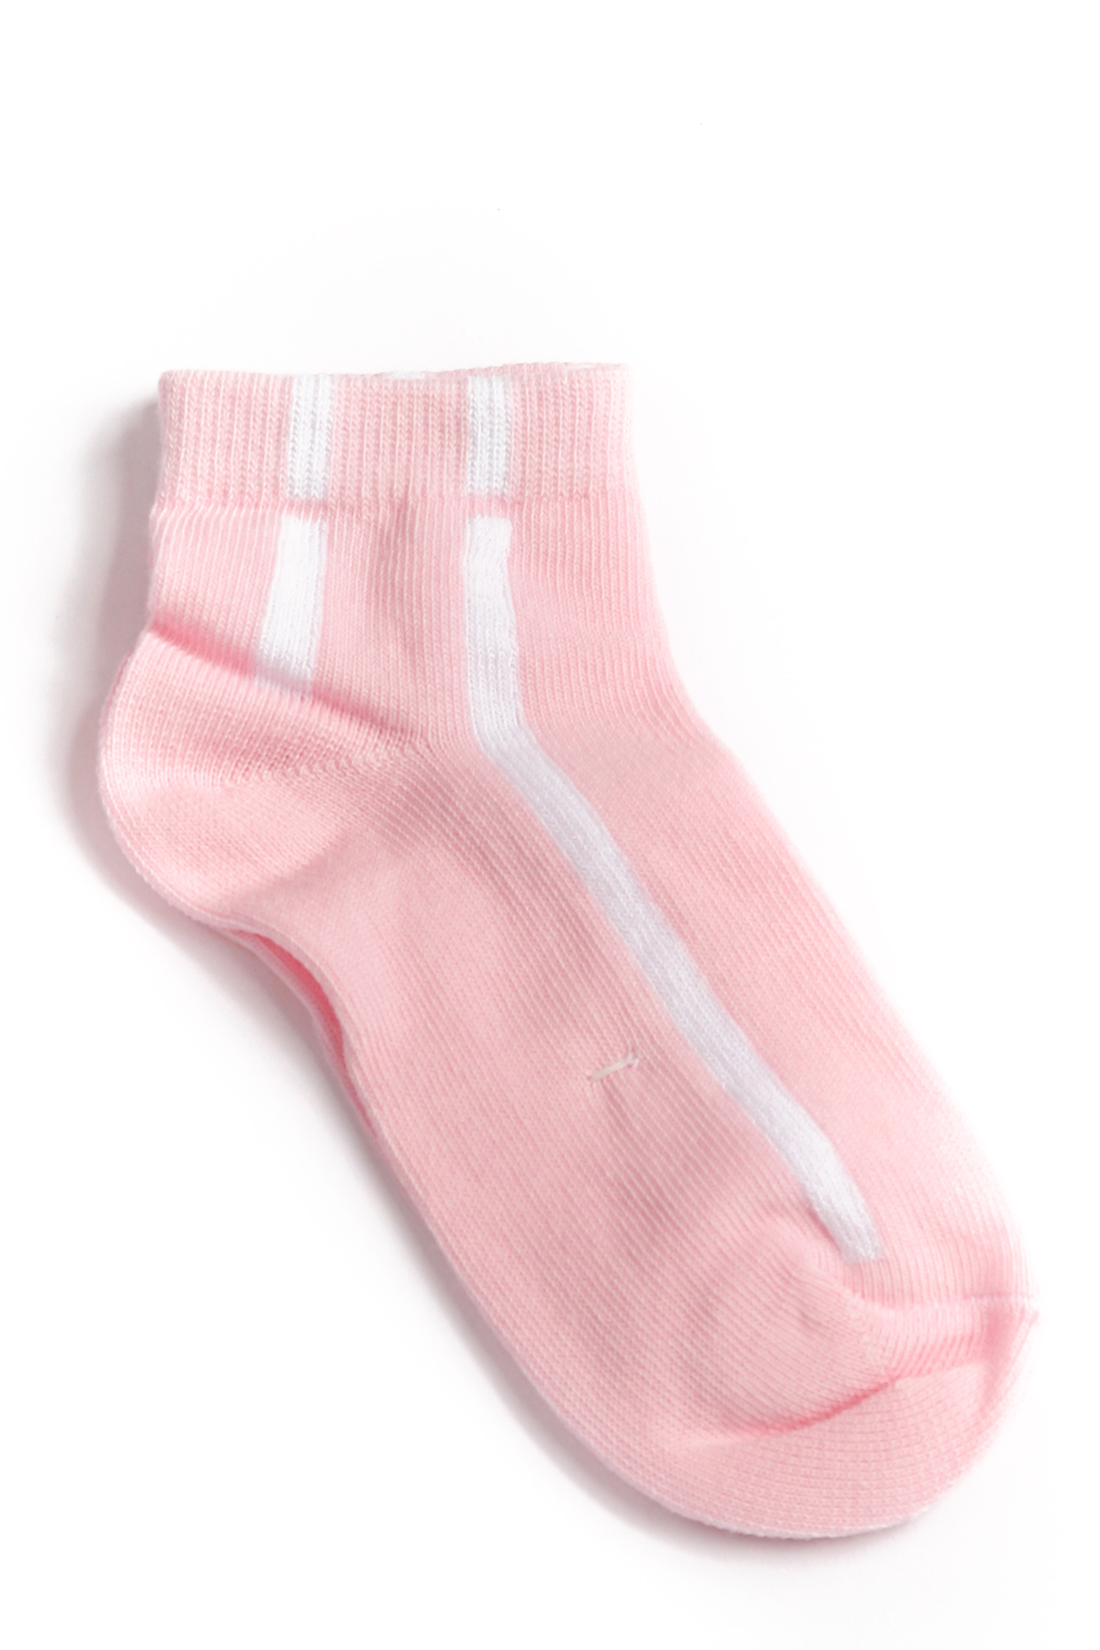 Носки для девочки (арт. baon BJ399001), размер 35/38, цвет розовый